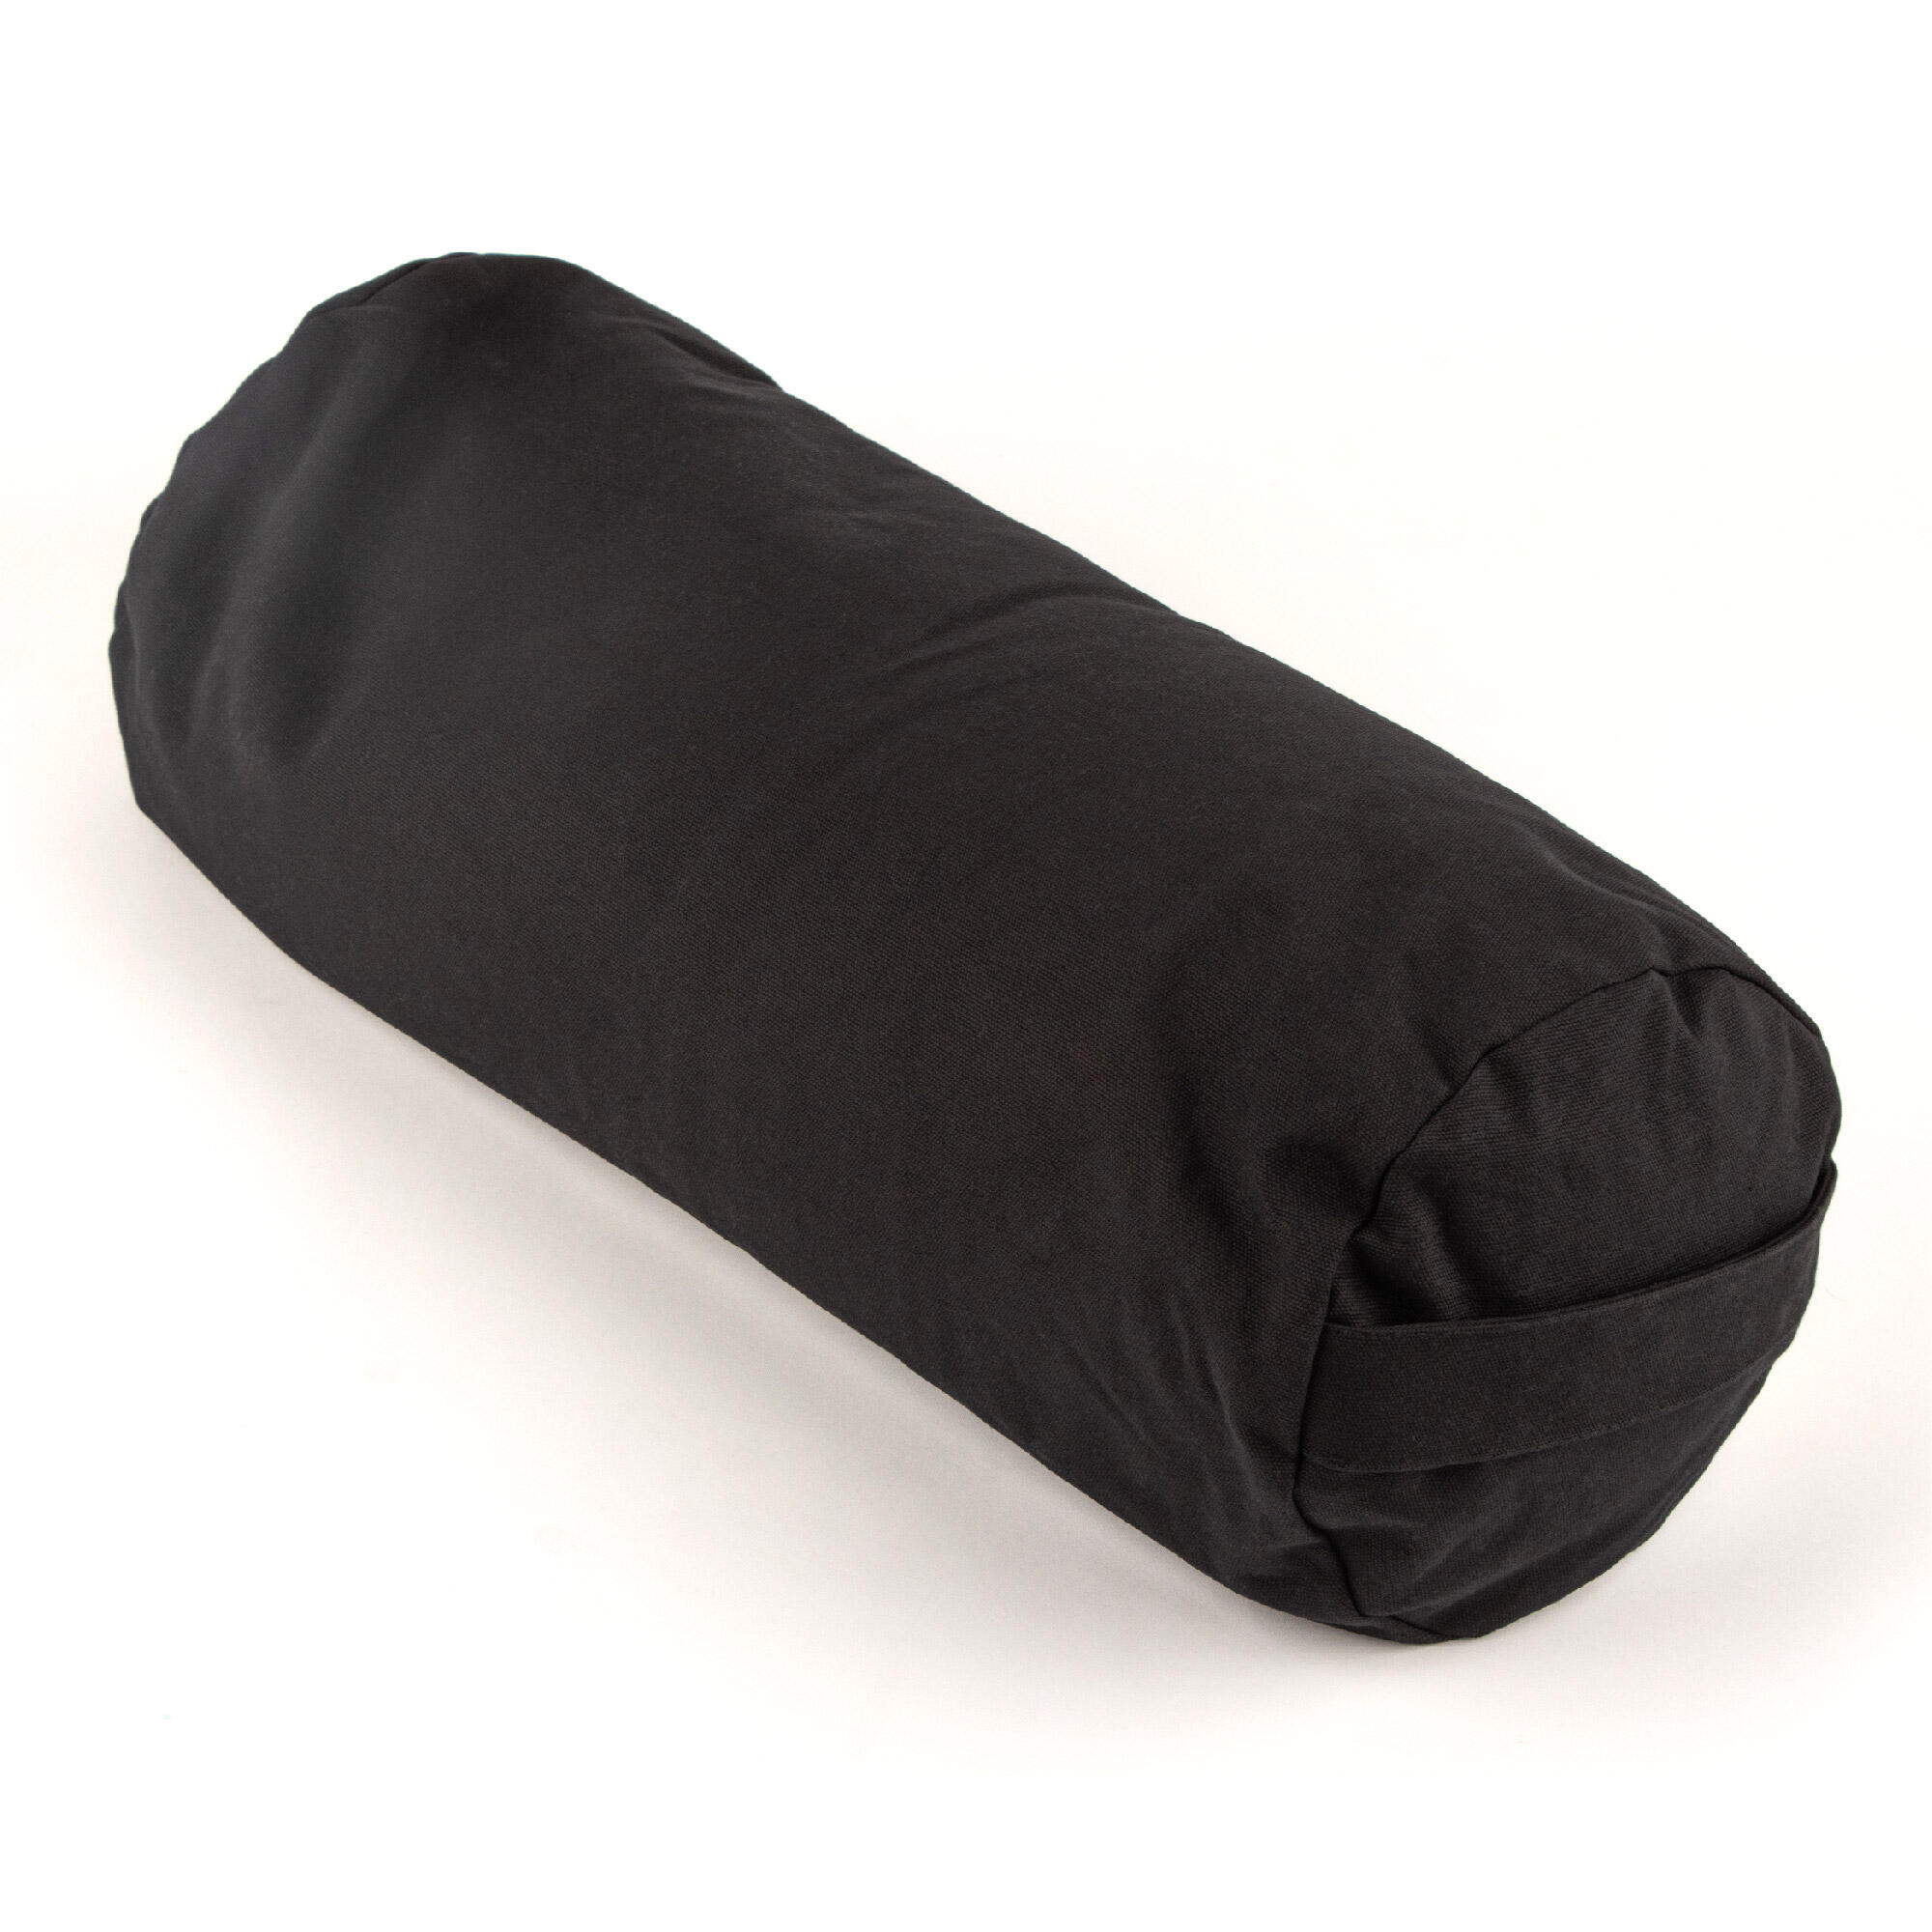 Myga Buckwheat Support Bolster Pillow - Black 1/8